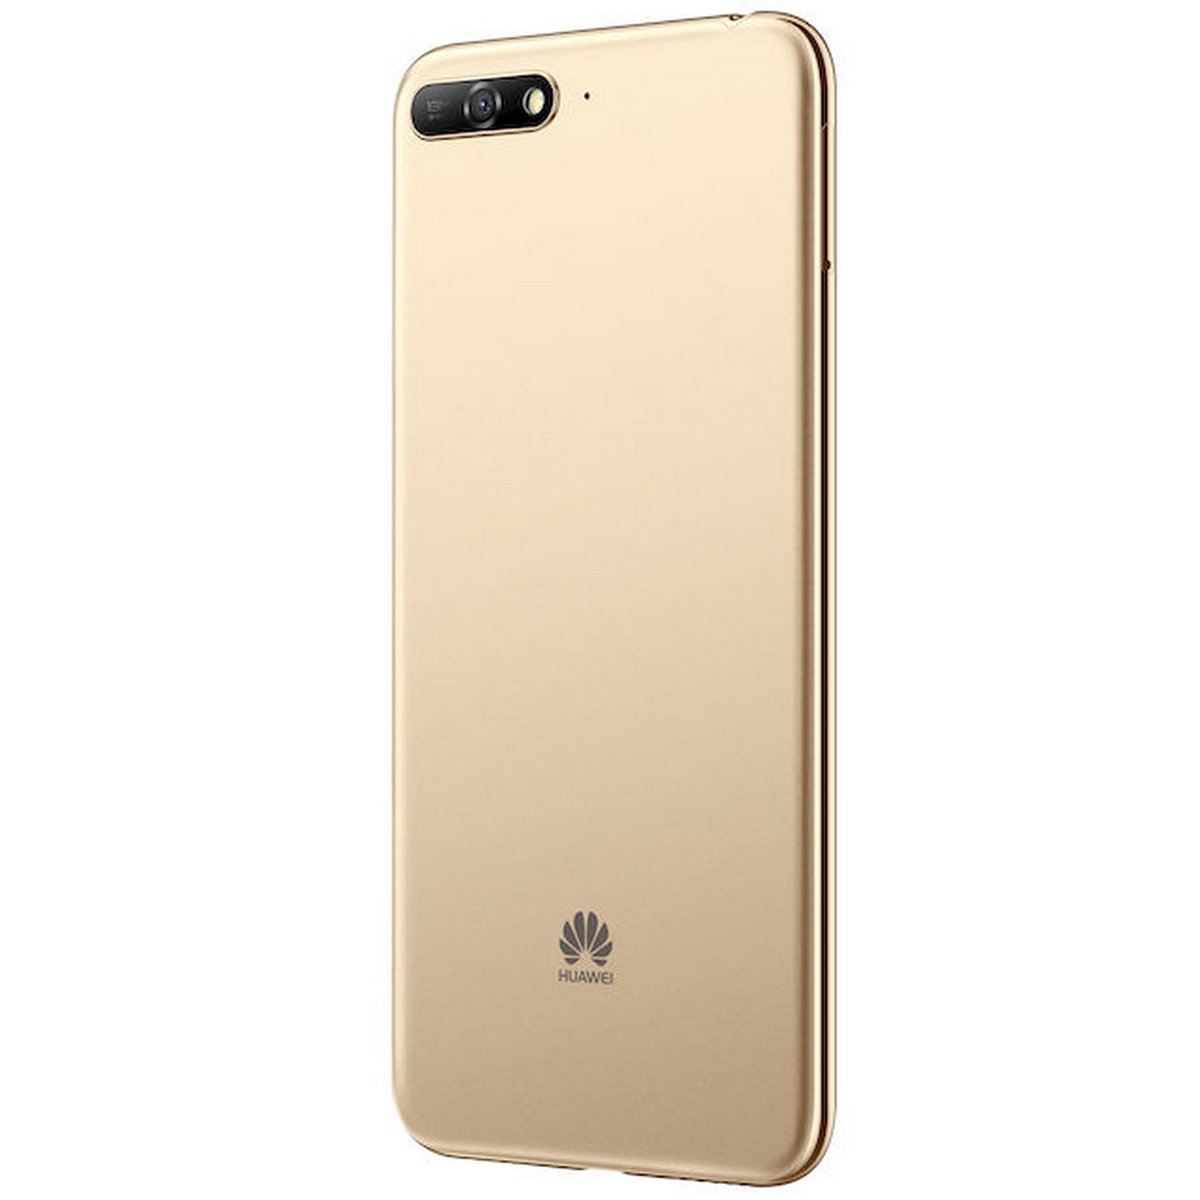 Huawei Y6 Prime 2018 16GB Gold